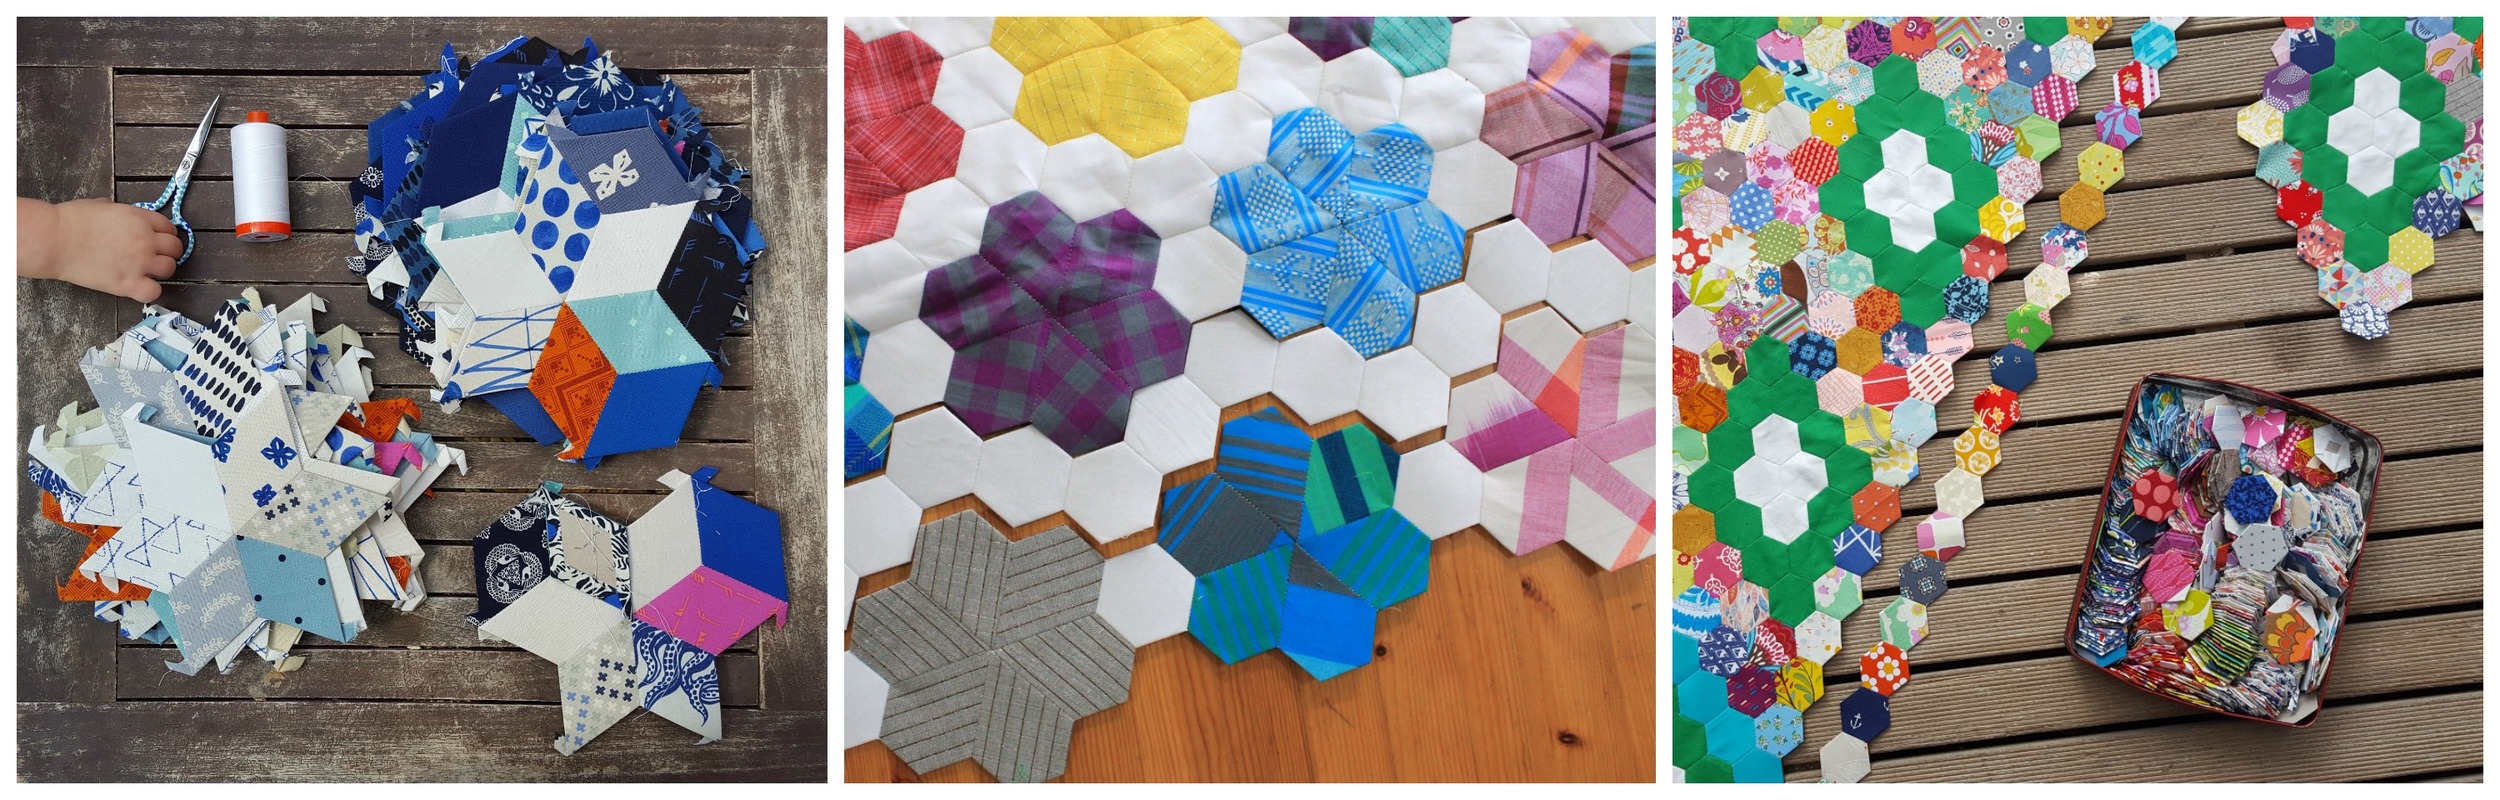 Free hexagon templates – printable hexagon patterns — Gathered  Free paper  piecing patterns, English paper piecing quilts, Paper piecing quilts